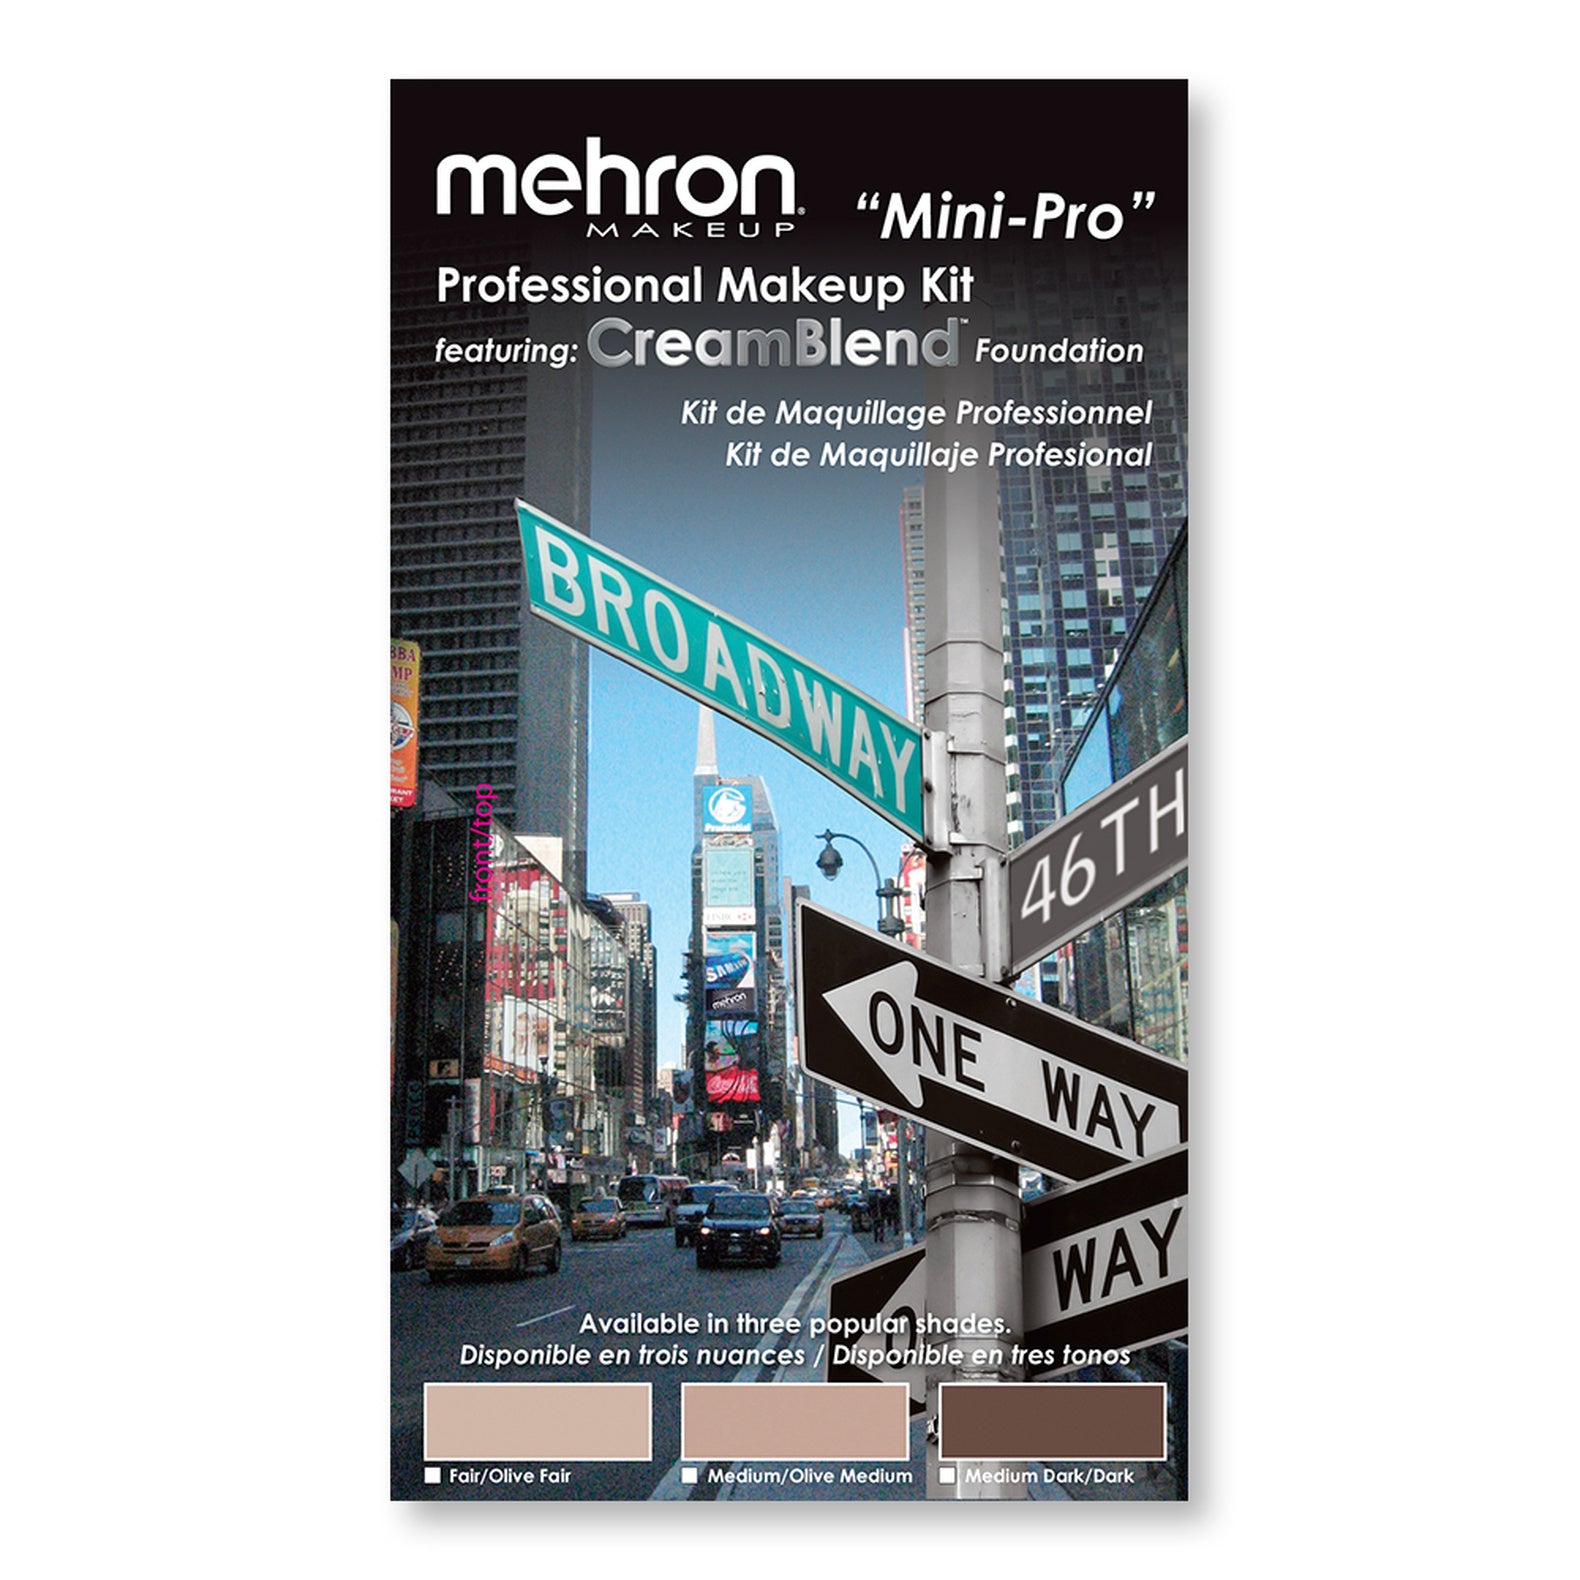 The front of the Mehron Mini-pro professional makeup kit.